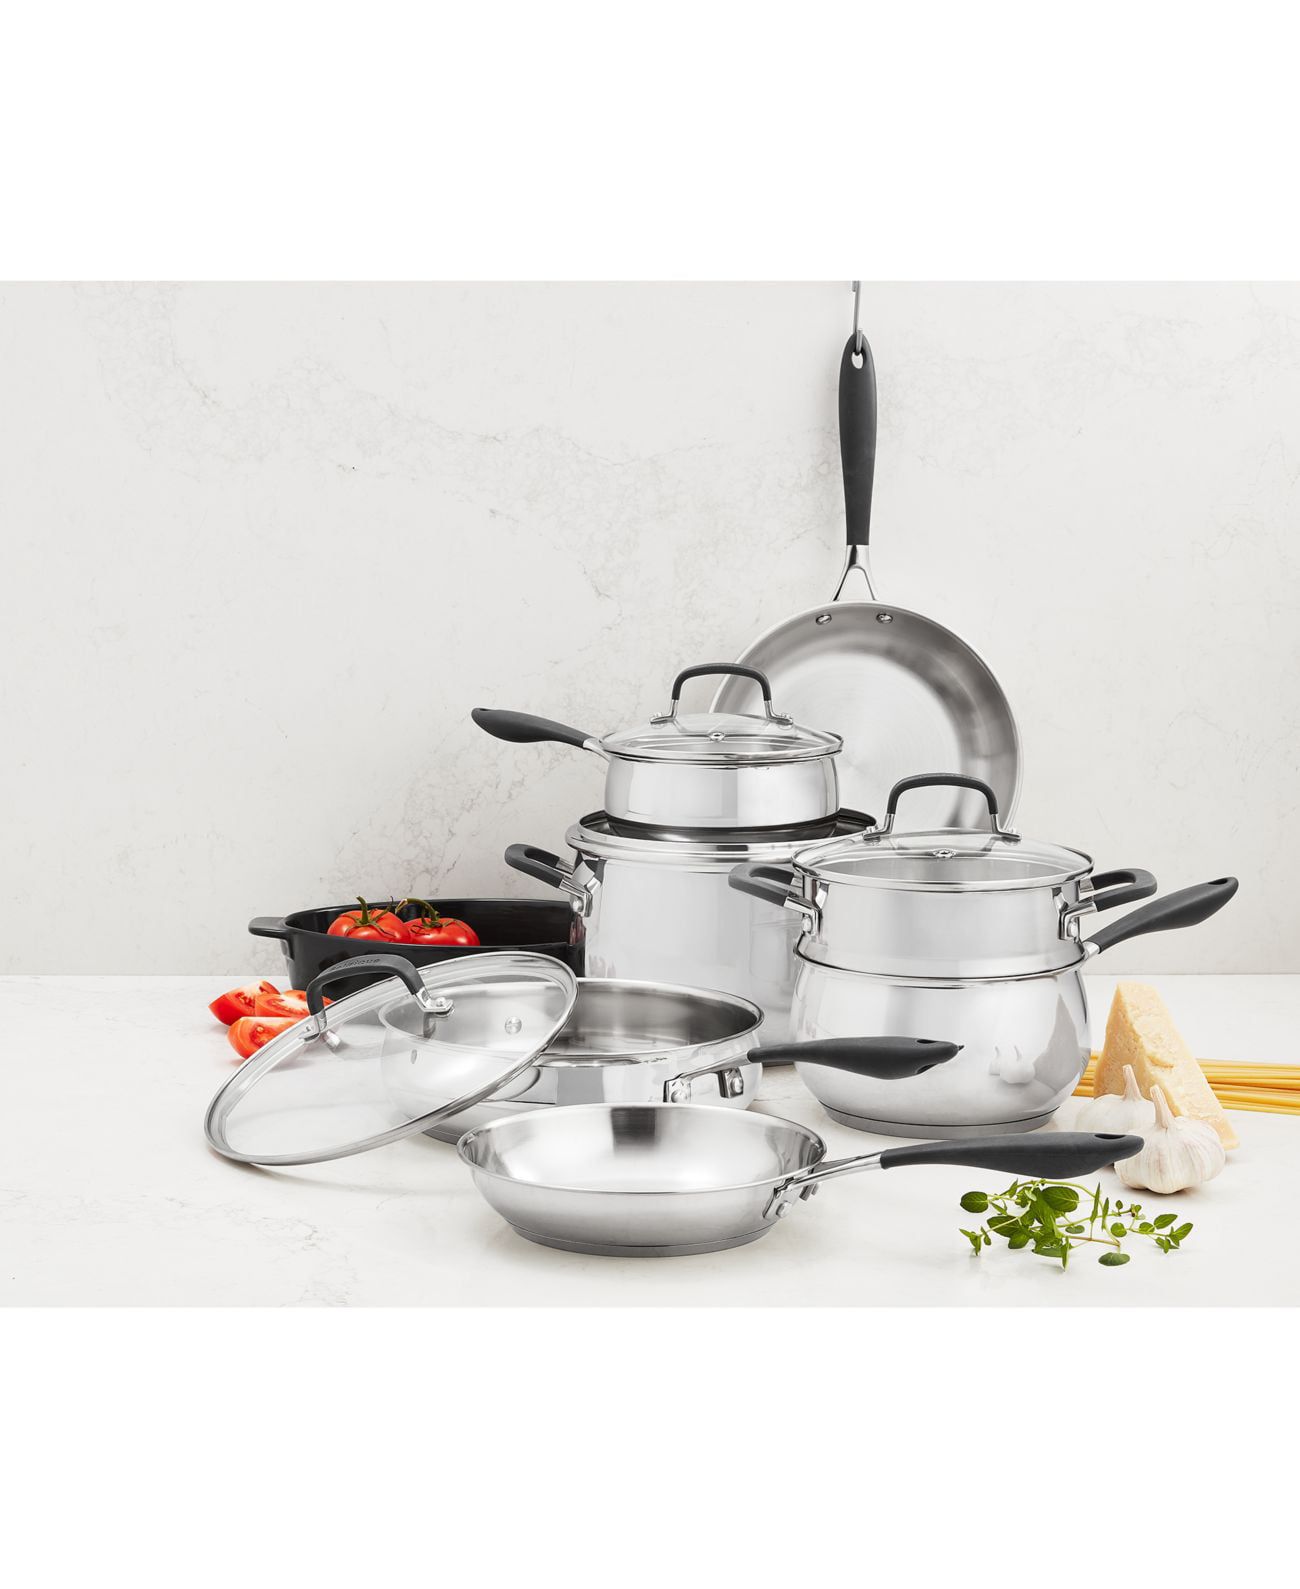 Belgique Stainless Steel 12-Pc. Cookware Set